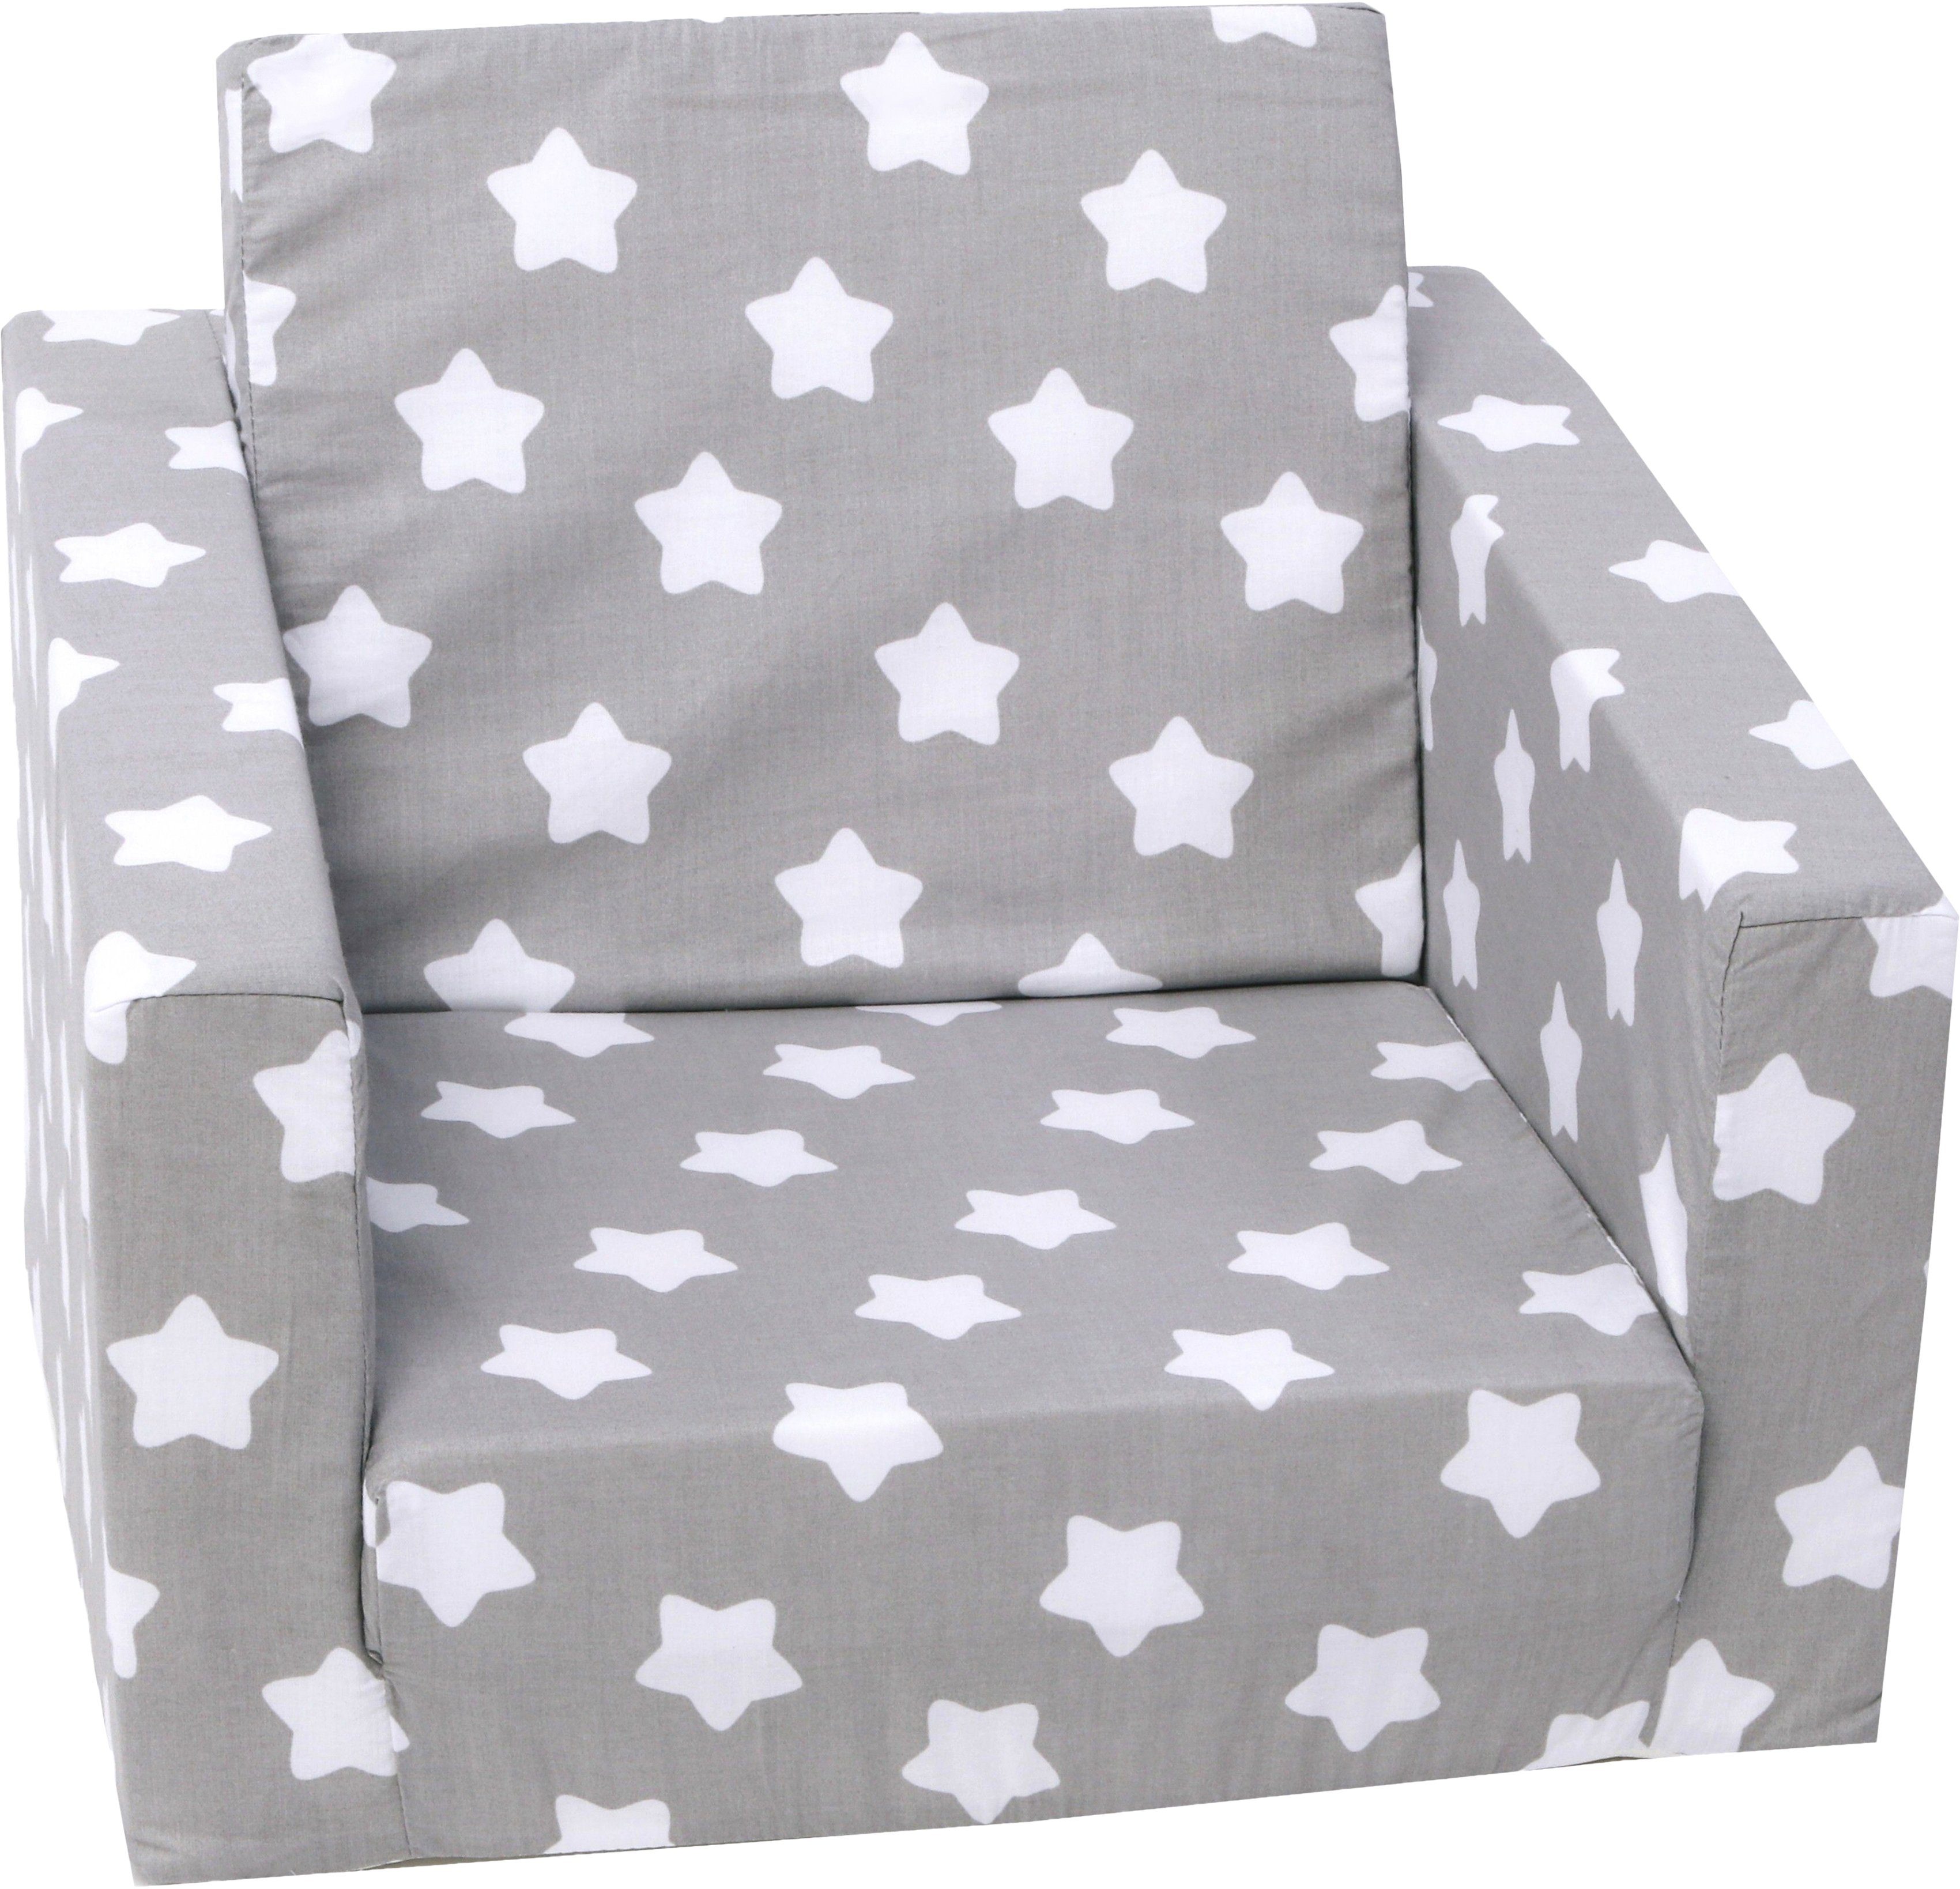 Knorrtoys® Sofa Singlesofa Grey White Stars, für Kinder; Made in Europe | Kindersofas